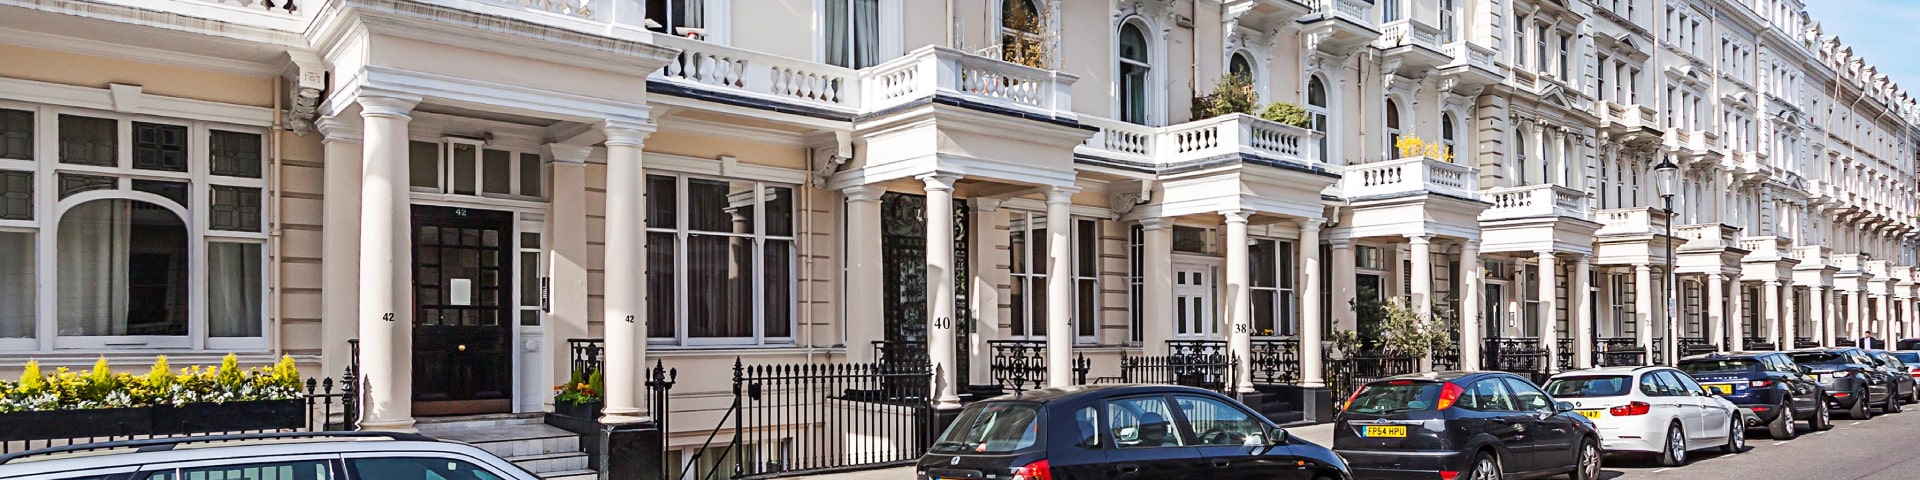 Flat For Rent in Chelsea | Flats To Rent in Kensington